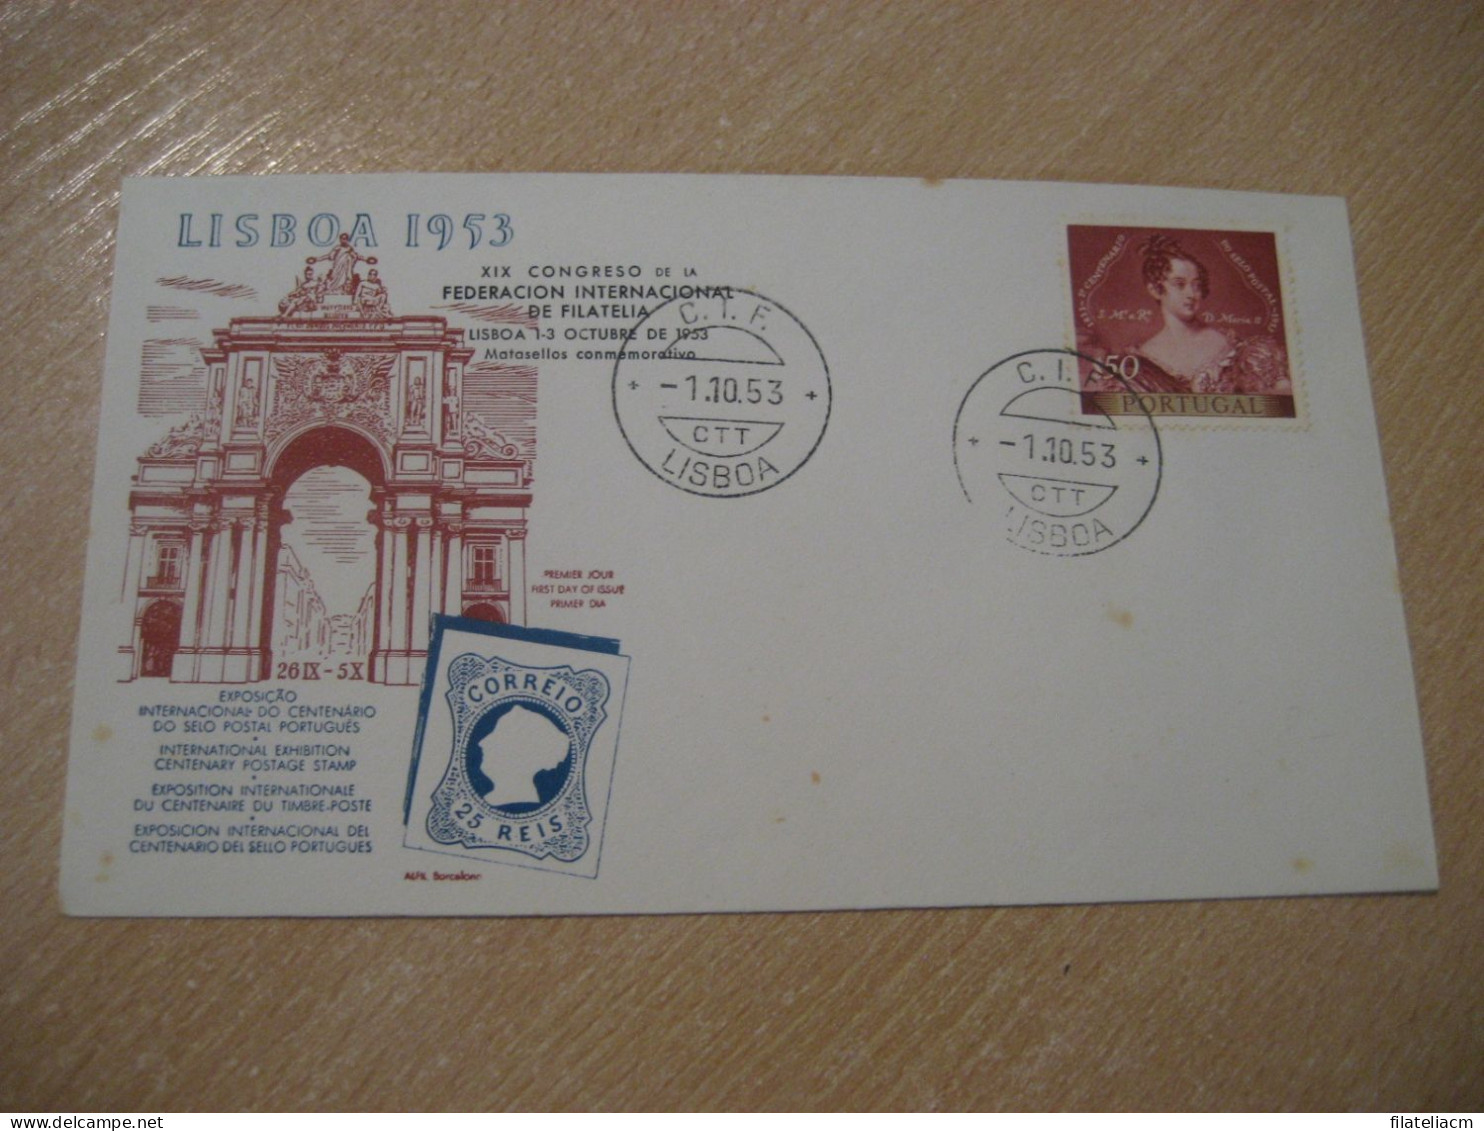 LISBOA 1953 C.I.F. CIF Expo Filatelica Int. Centenary Postage Stamp Cancel Cover PORTUGAL - Storia Postale